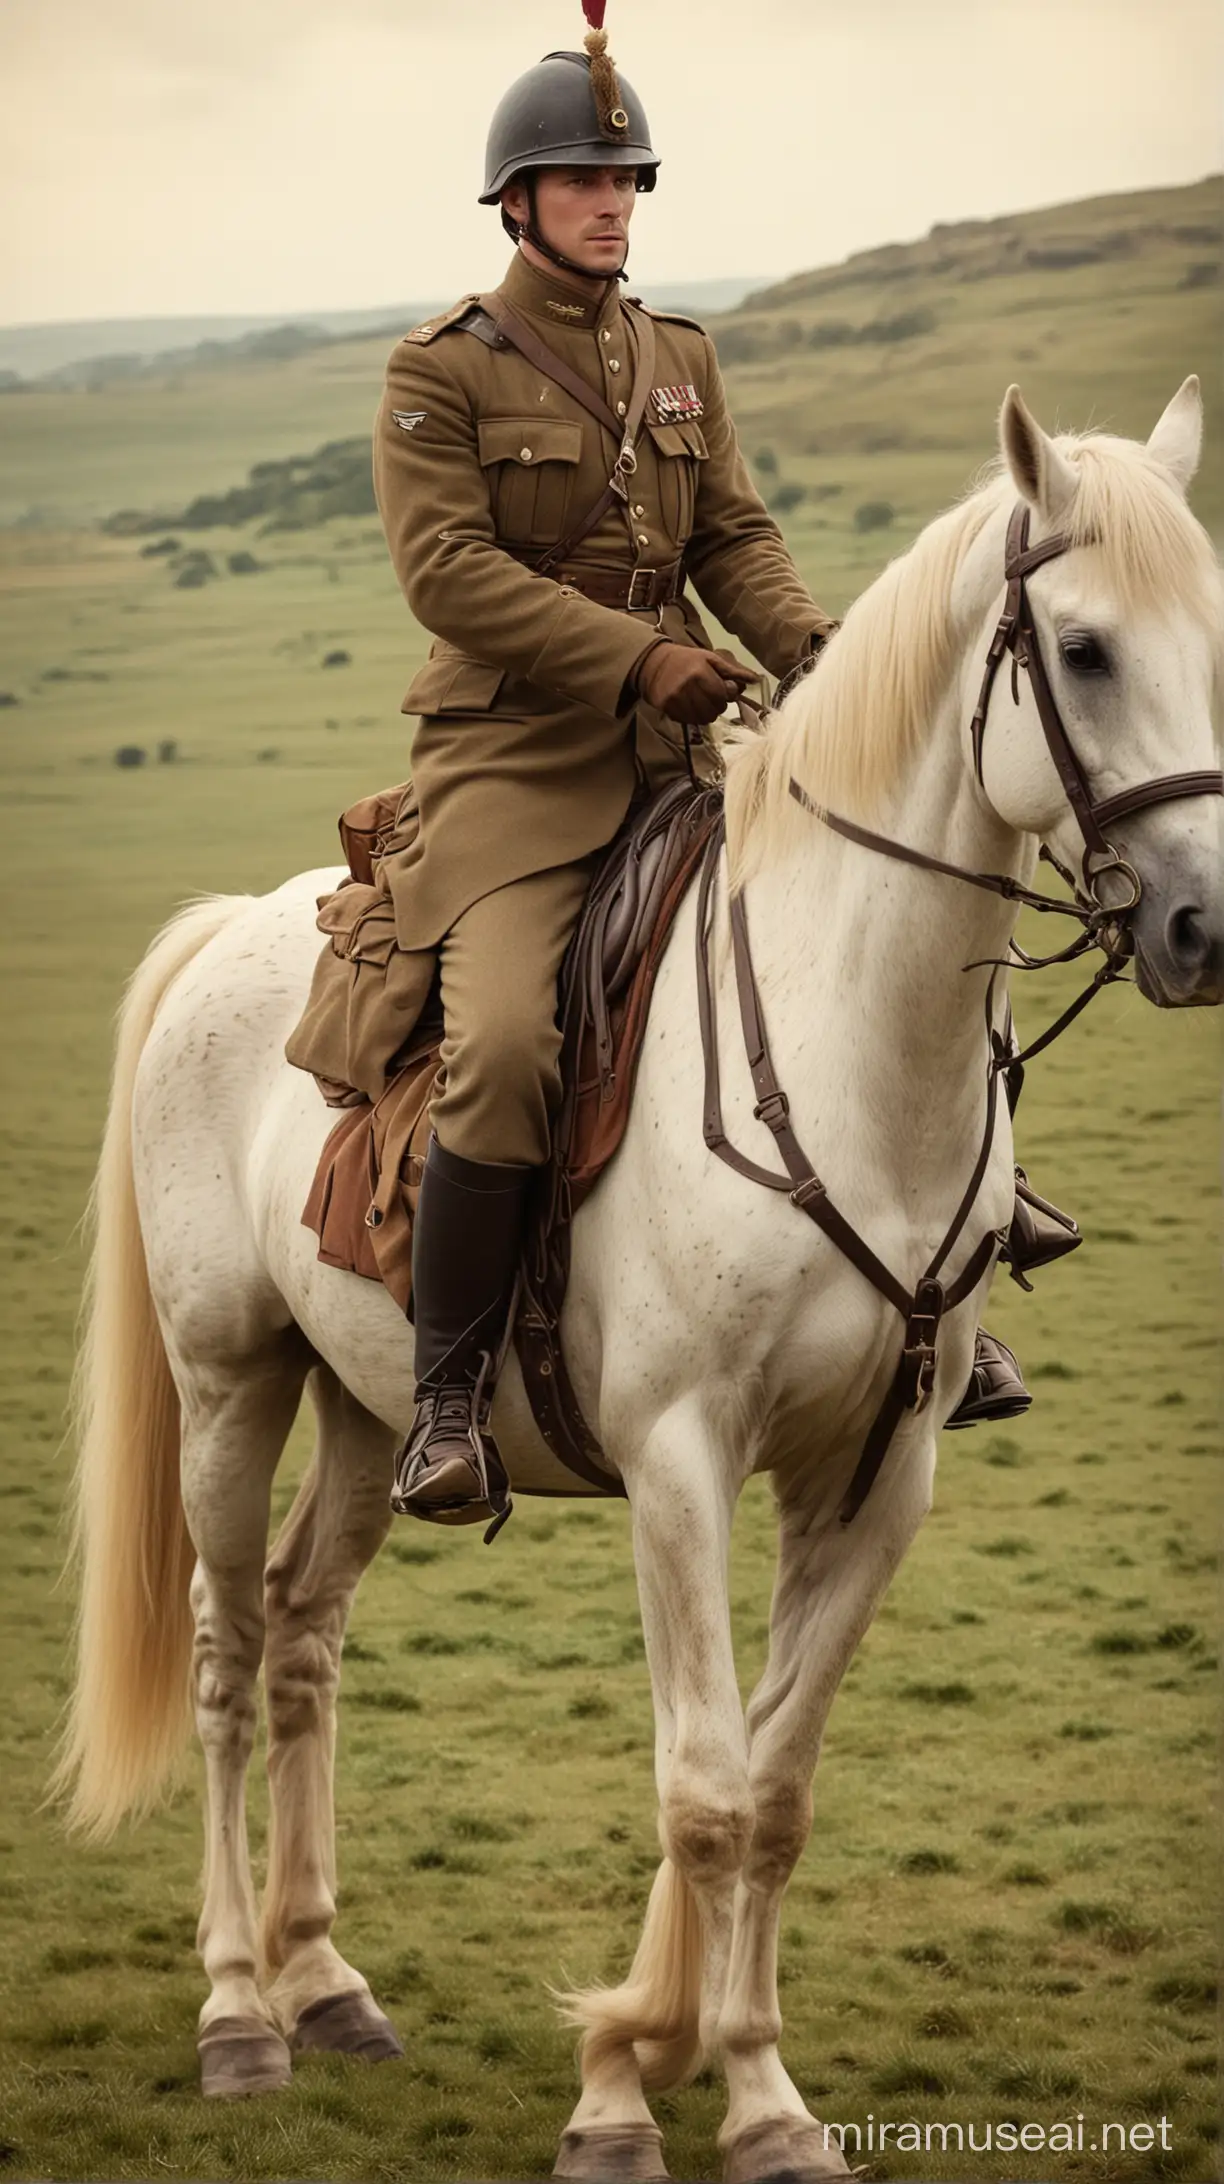 Vintage British Soldier Riding Horseback Through Countryside Landscape